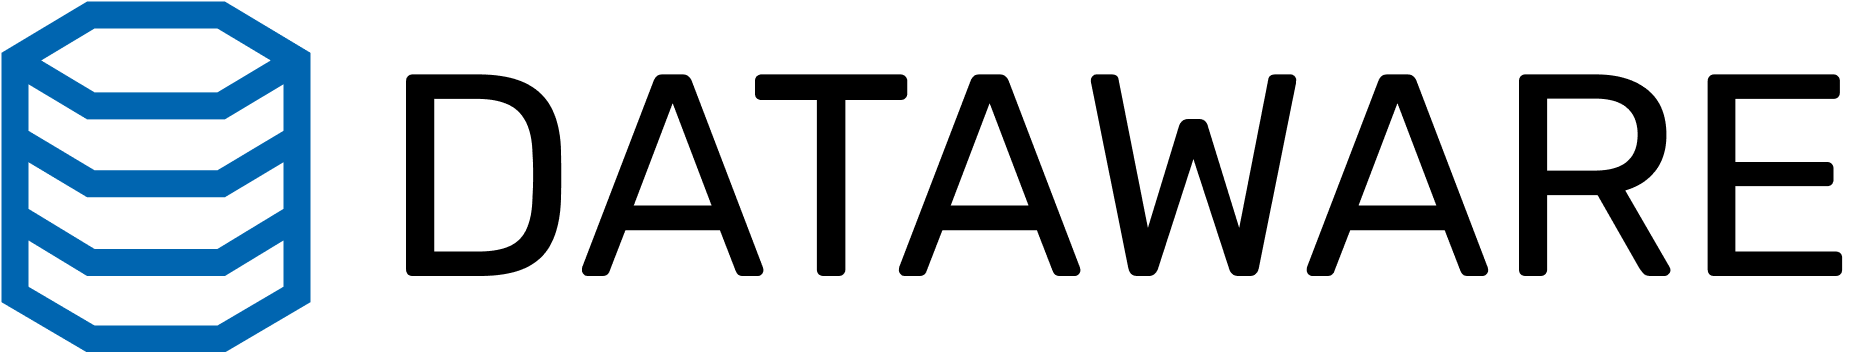 DATAWARE logo